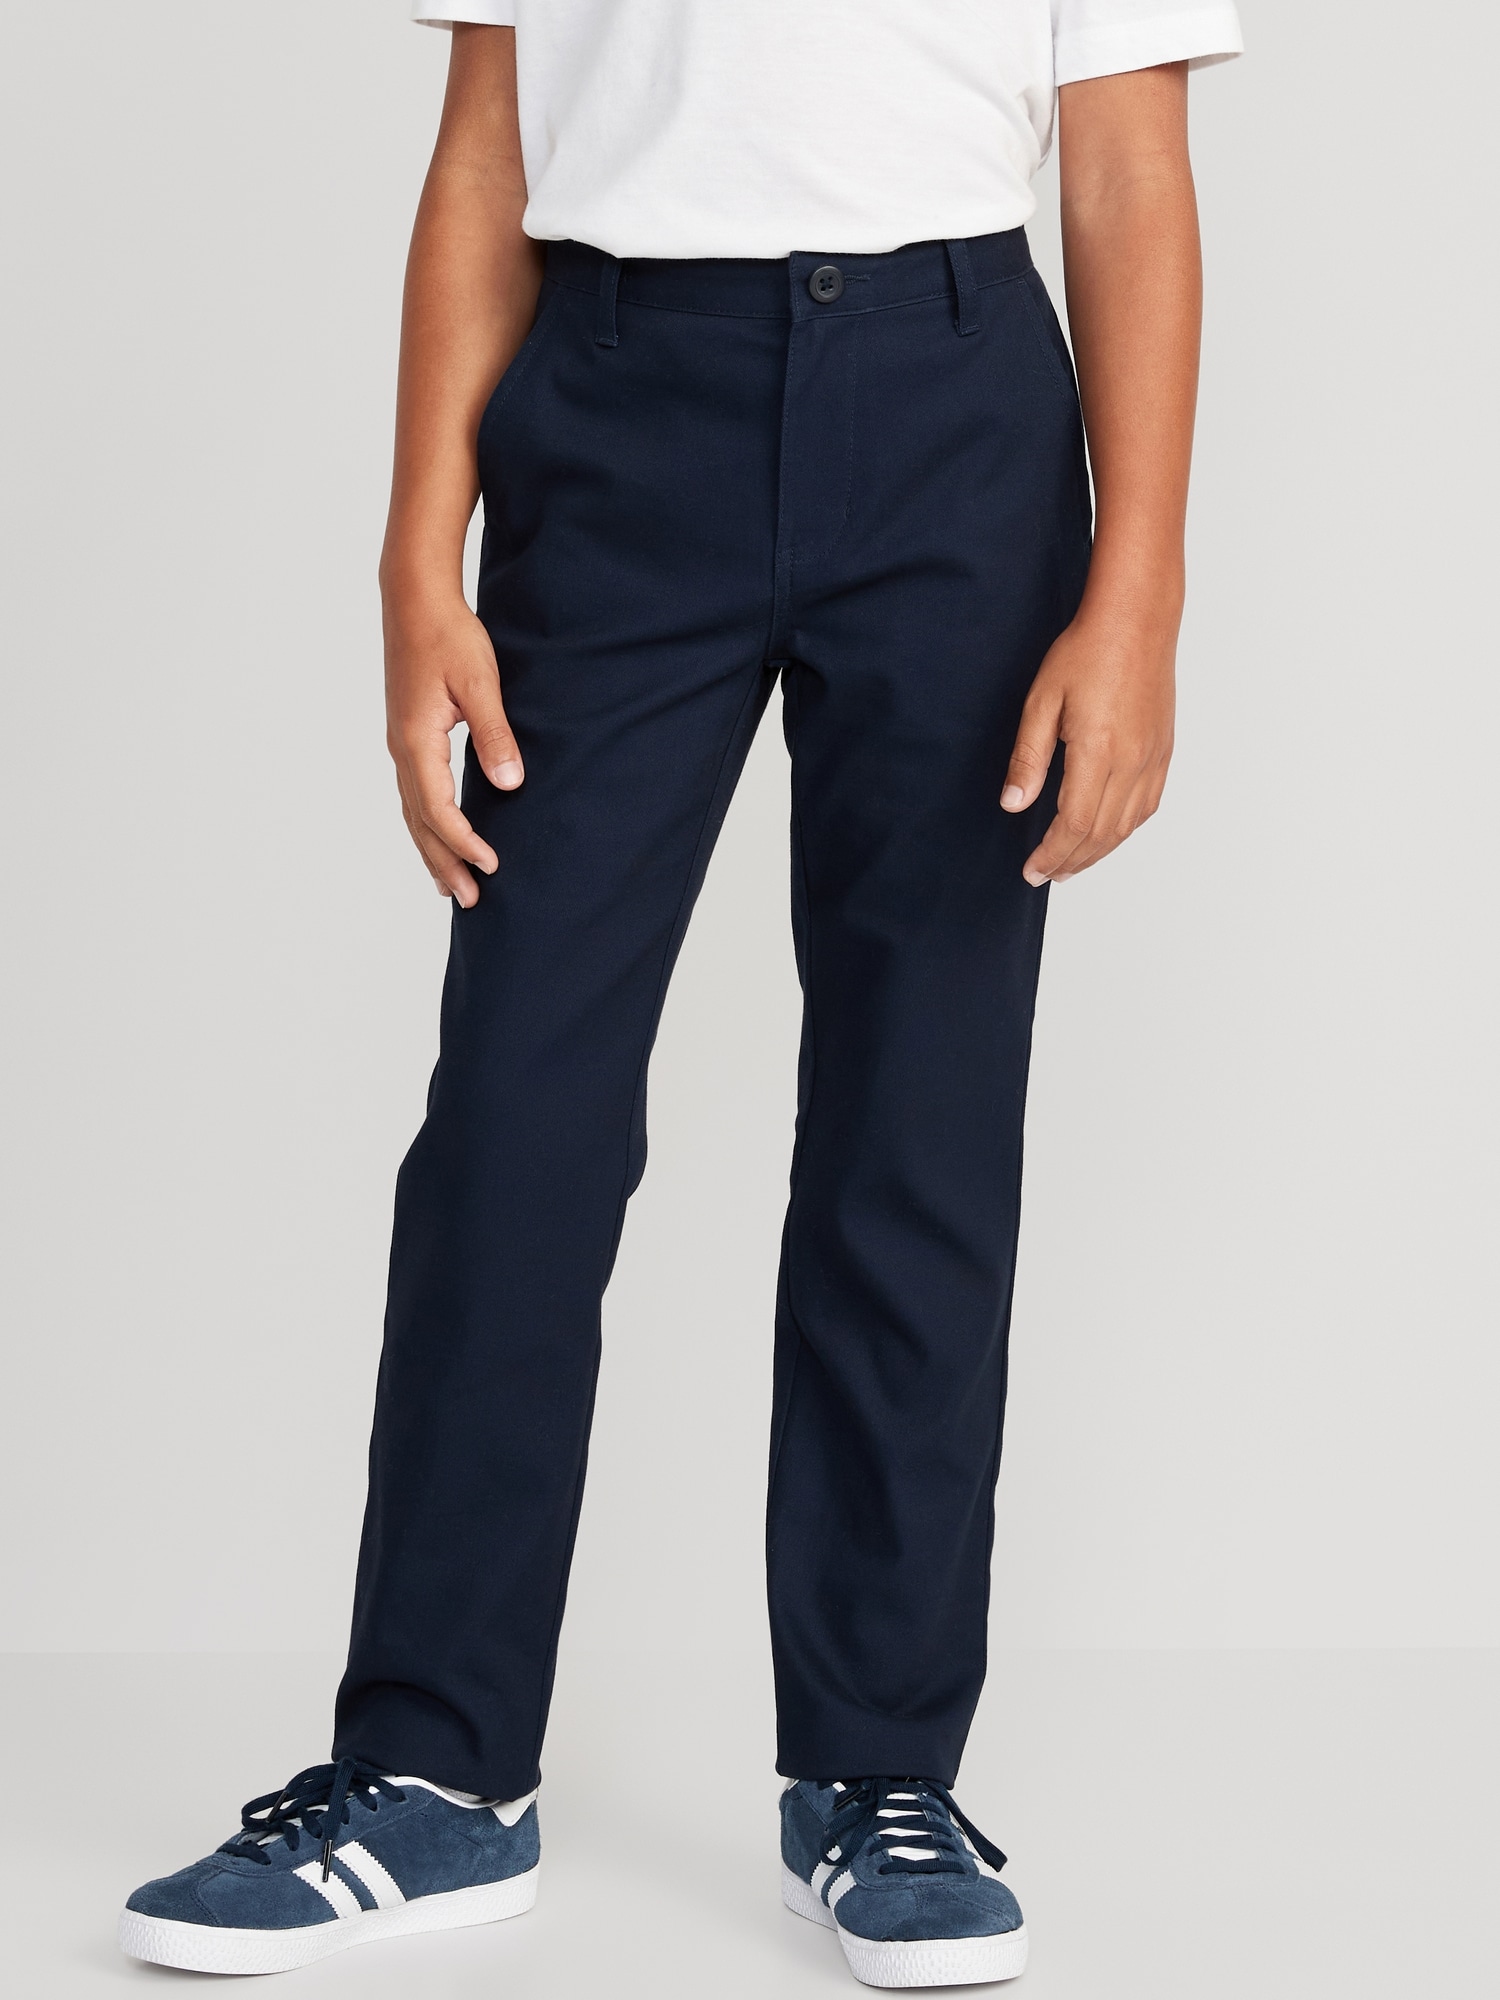 Slim Chino School Uniform Pants for Boys | Old Navy